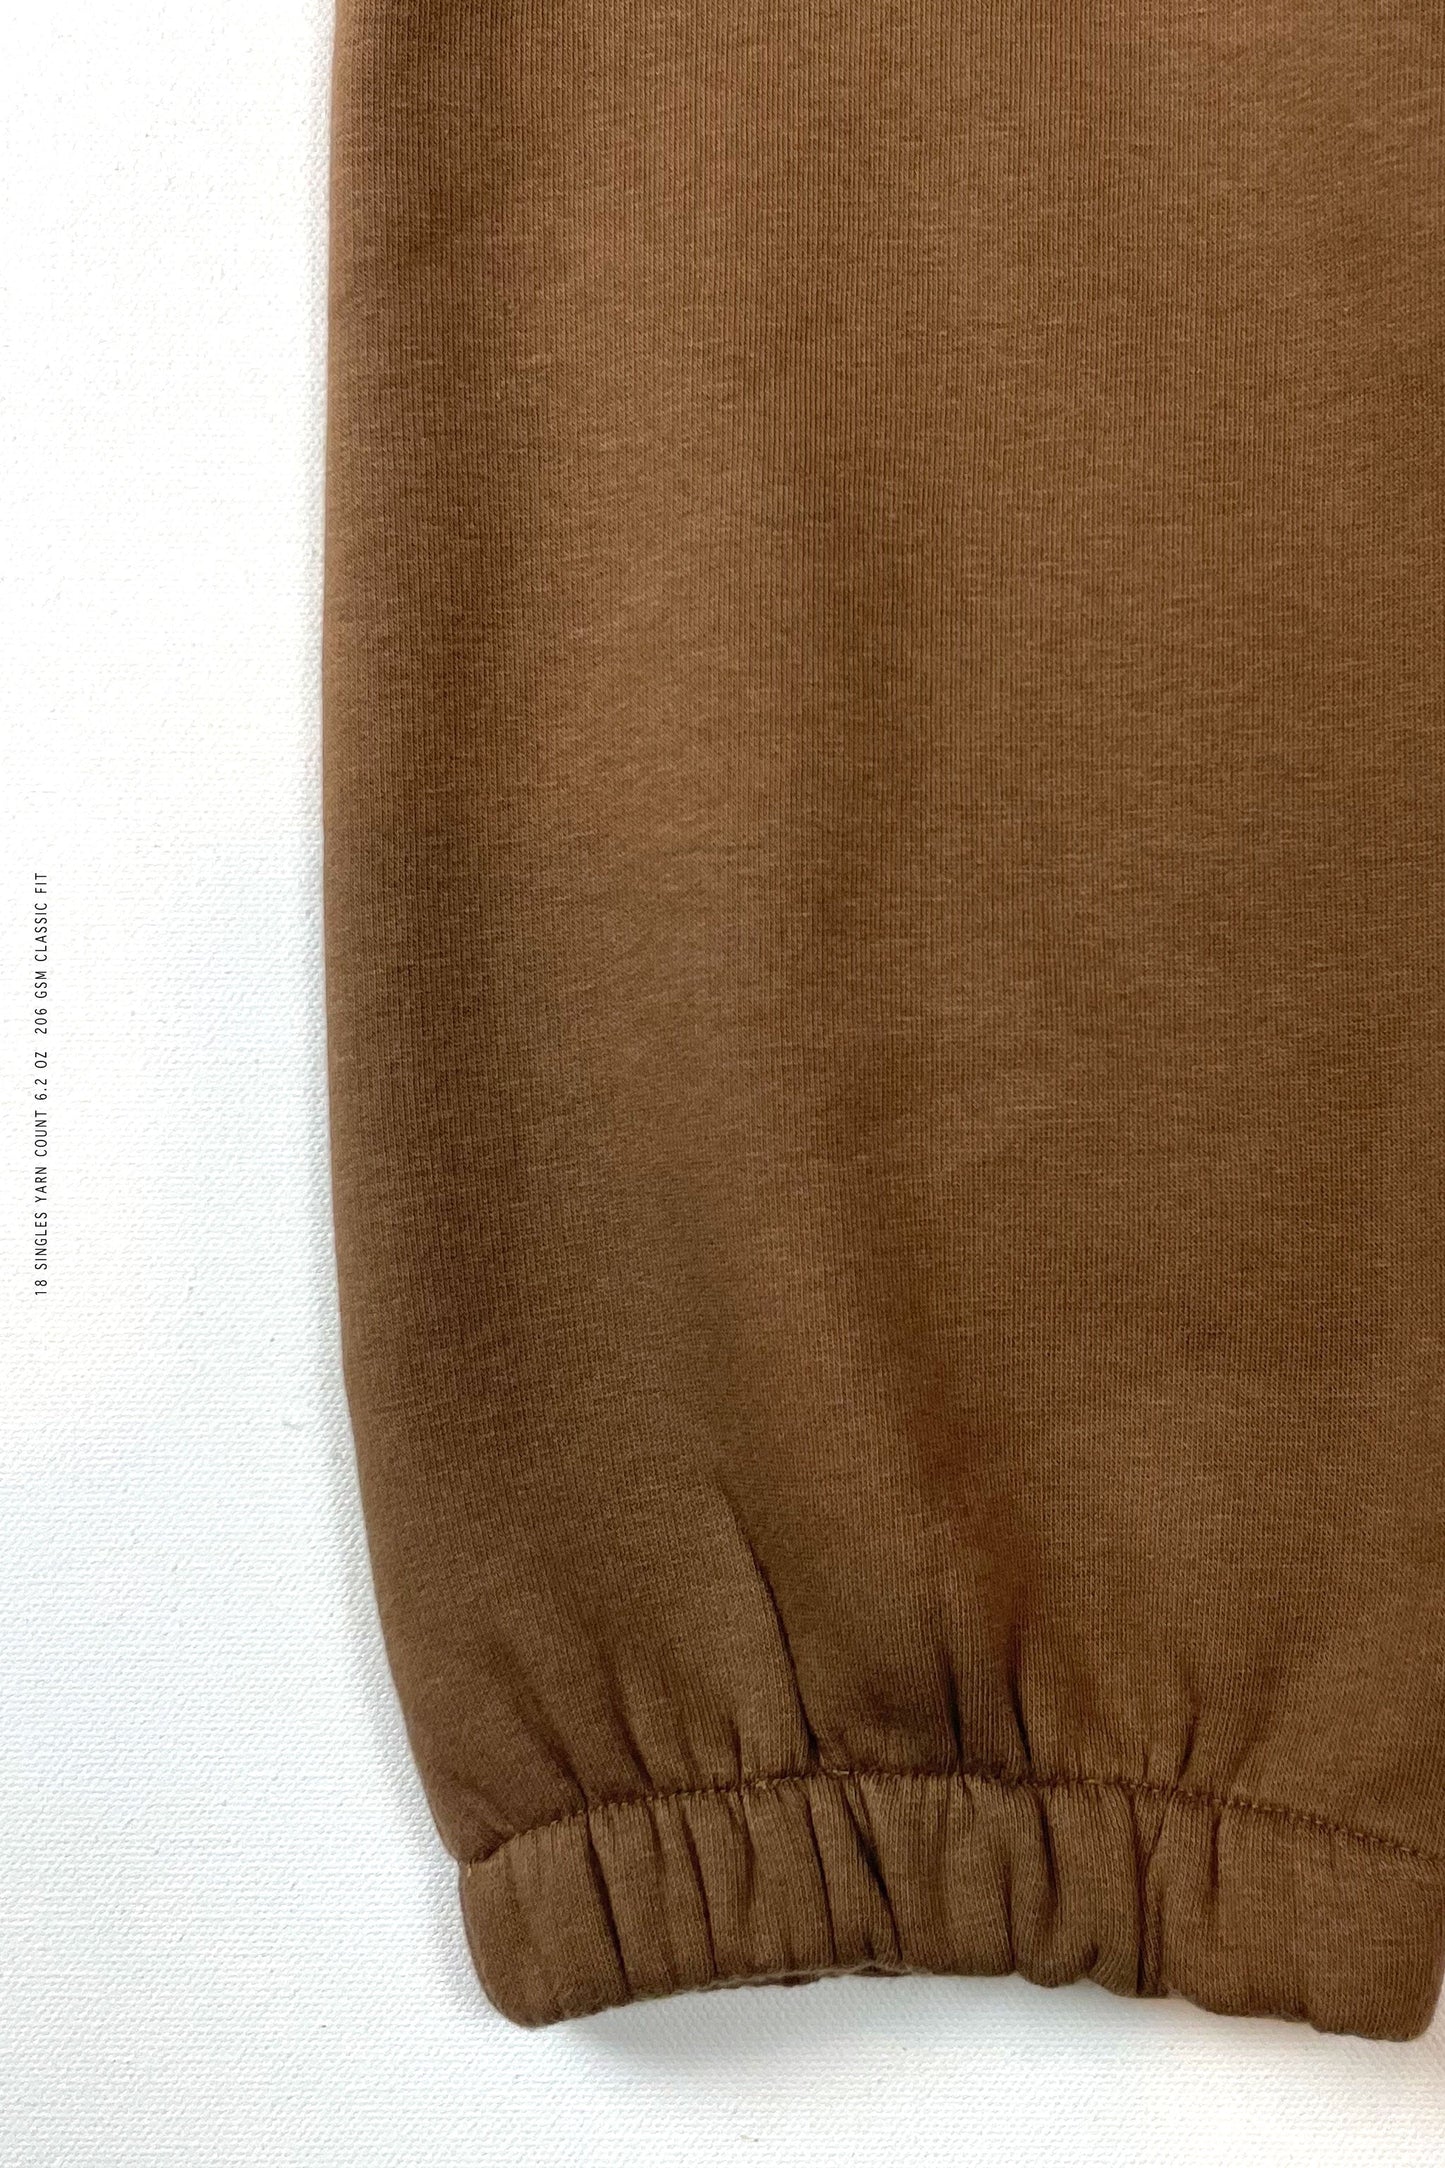 New Blank Sweatpants - Light Brown